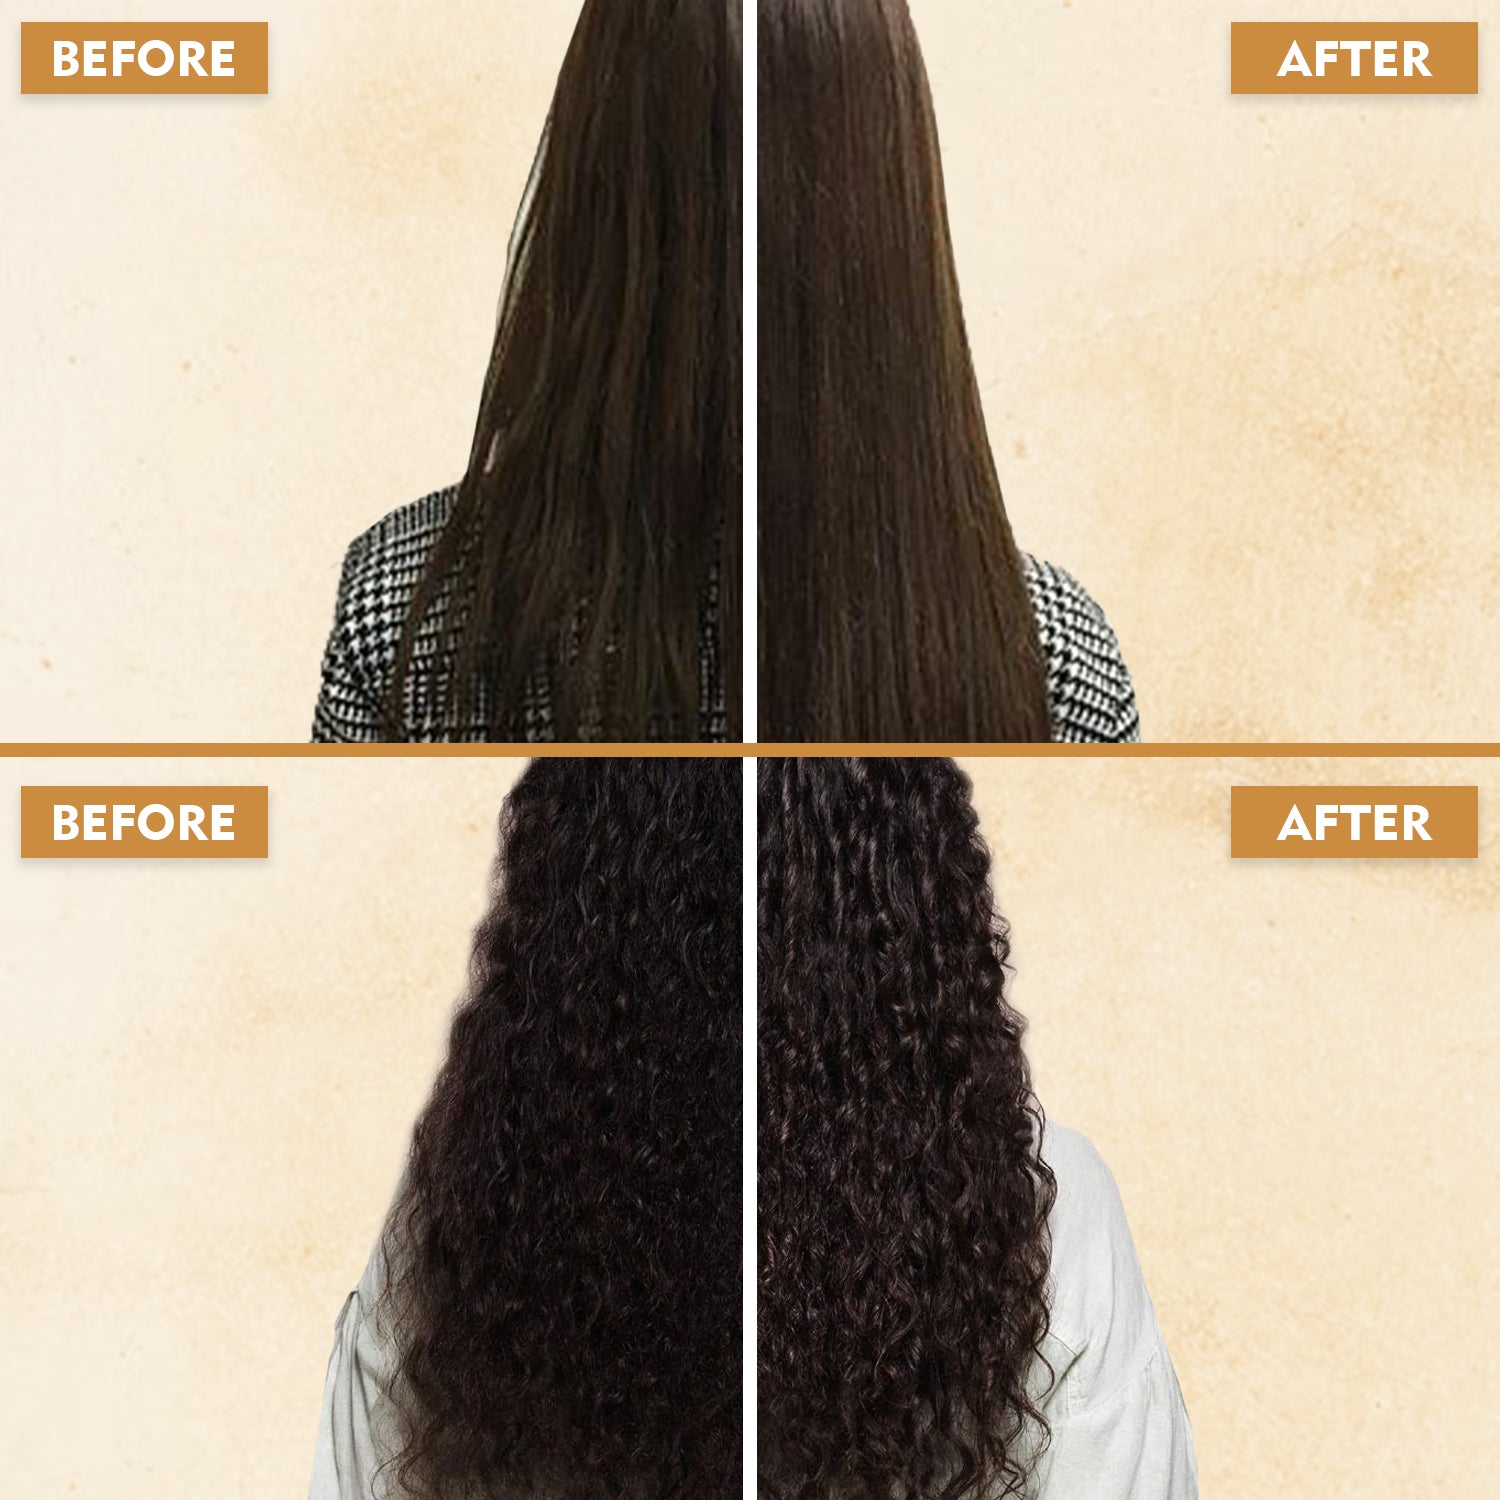 The Skin Story Ancient Ved Ayurvedic Hair Oil | Amla, Brahmi & Bhringraj | 100% Natural Ayurveda | 100 ml